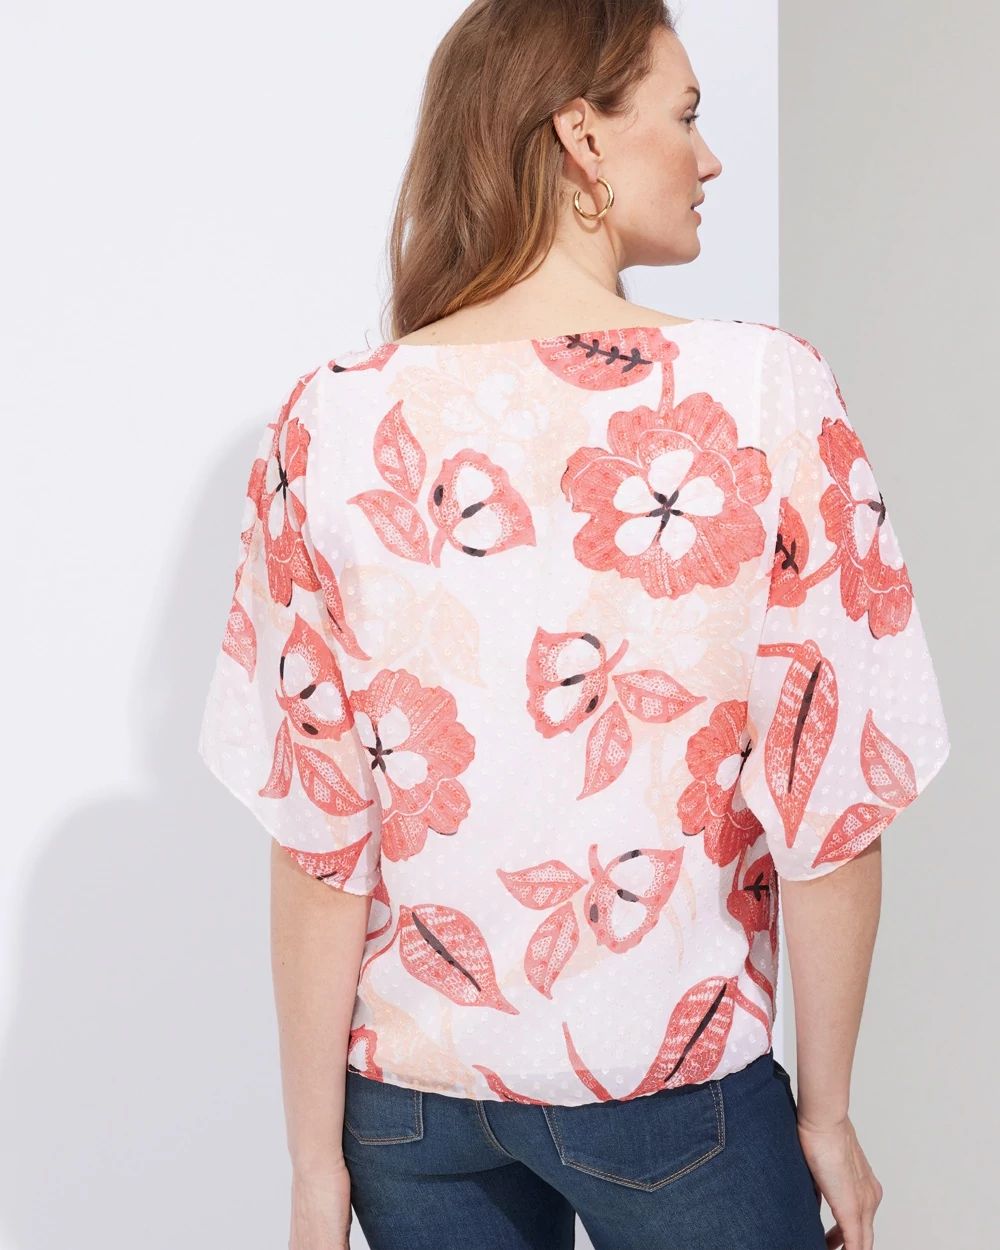 Outlet WHBM Print Jacquard Kimono Blouse click to view larger image.